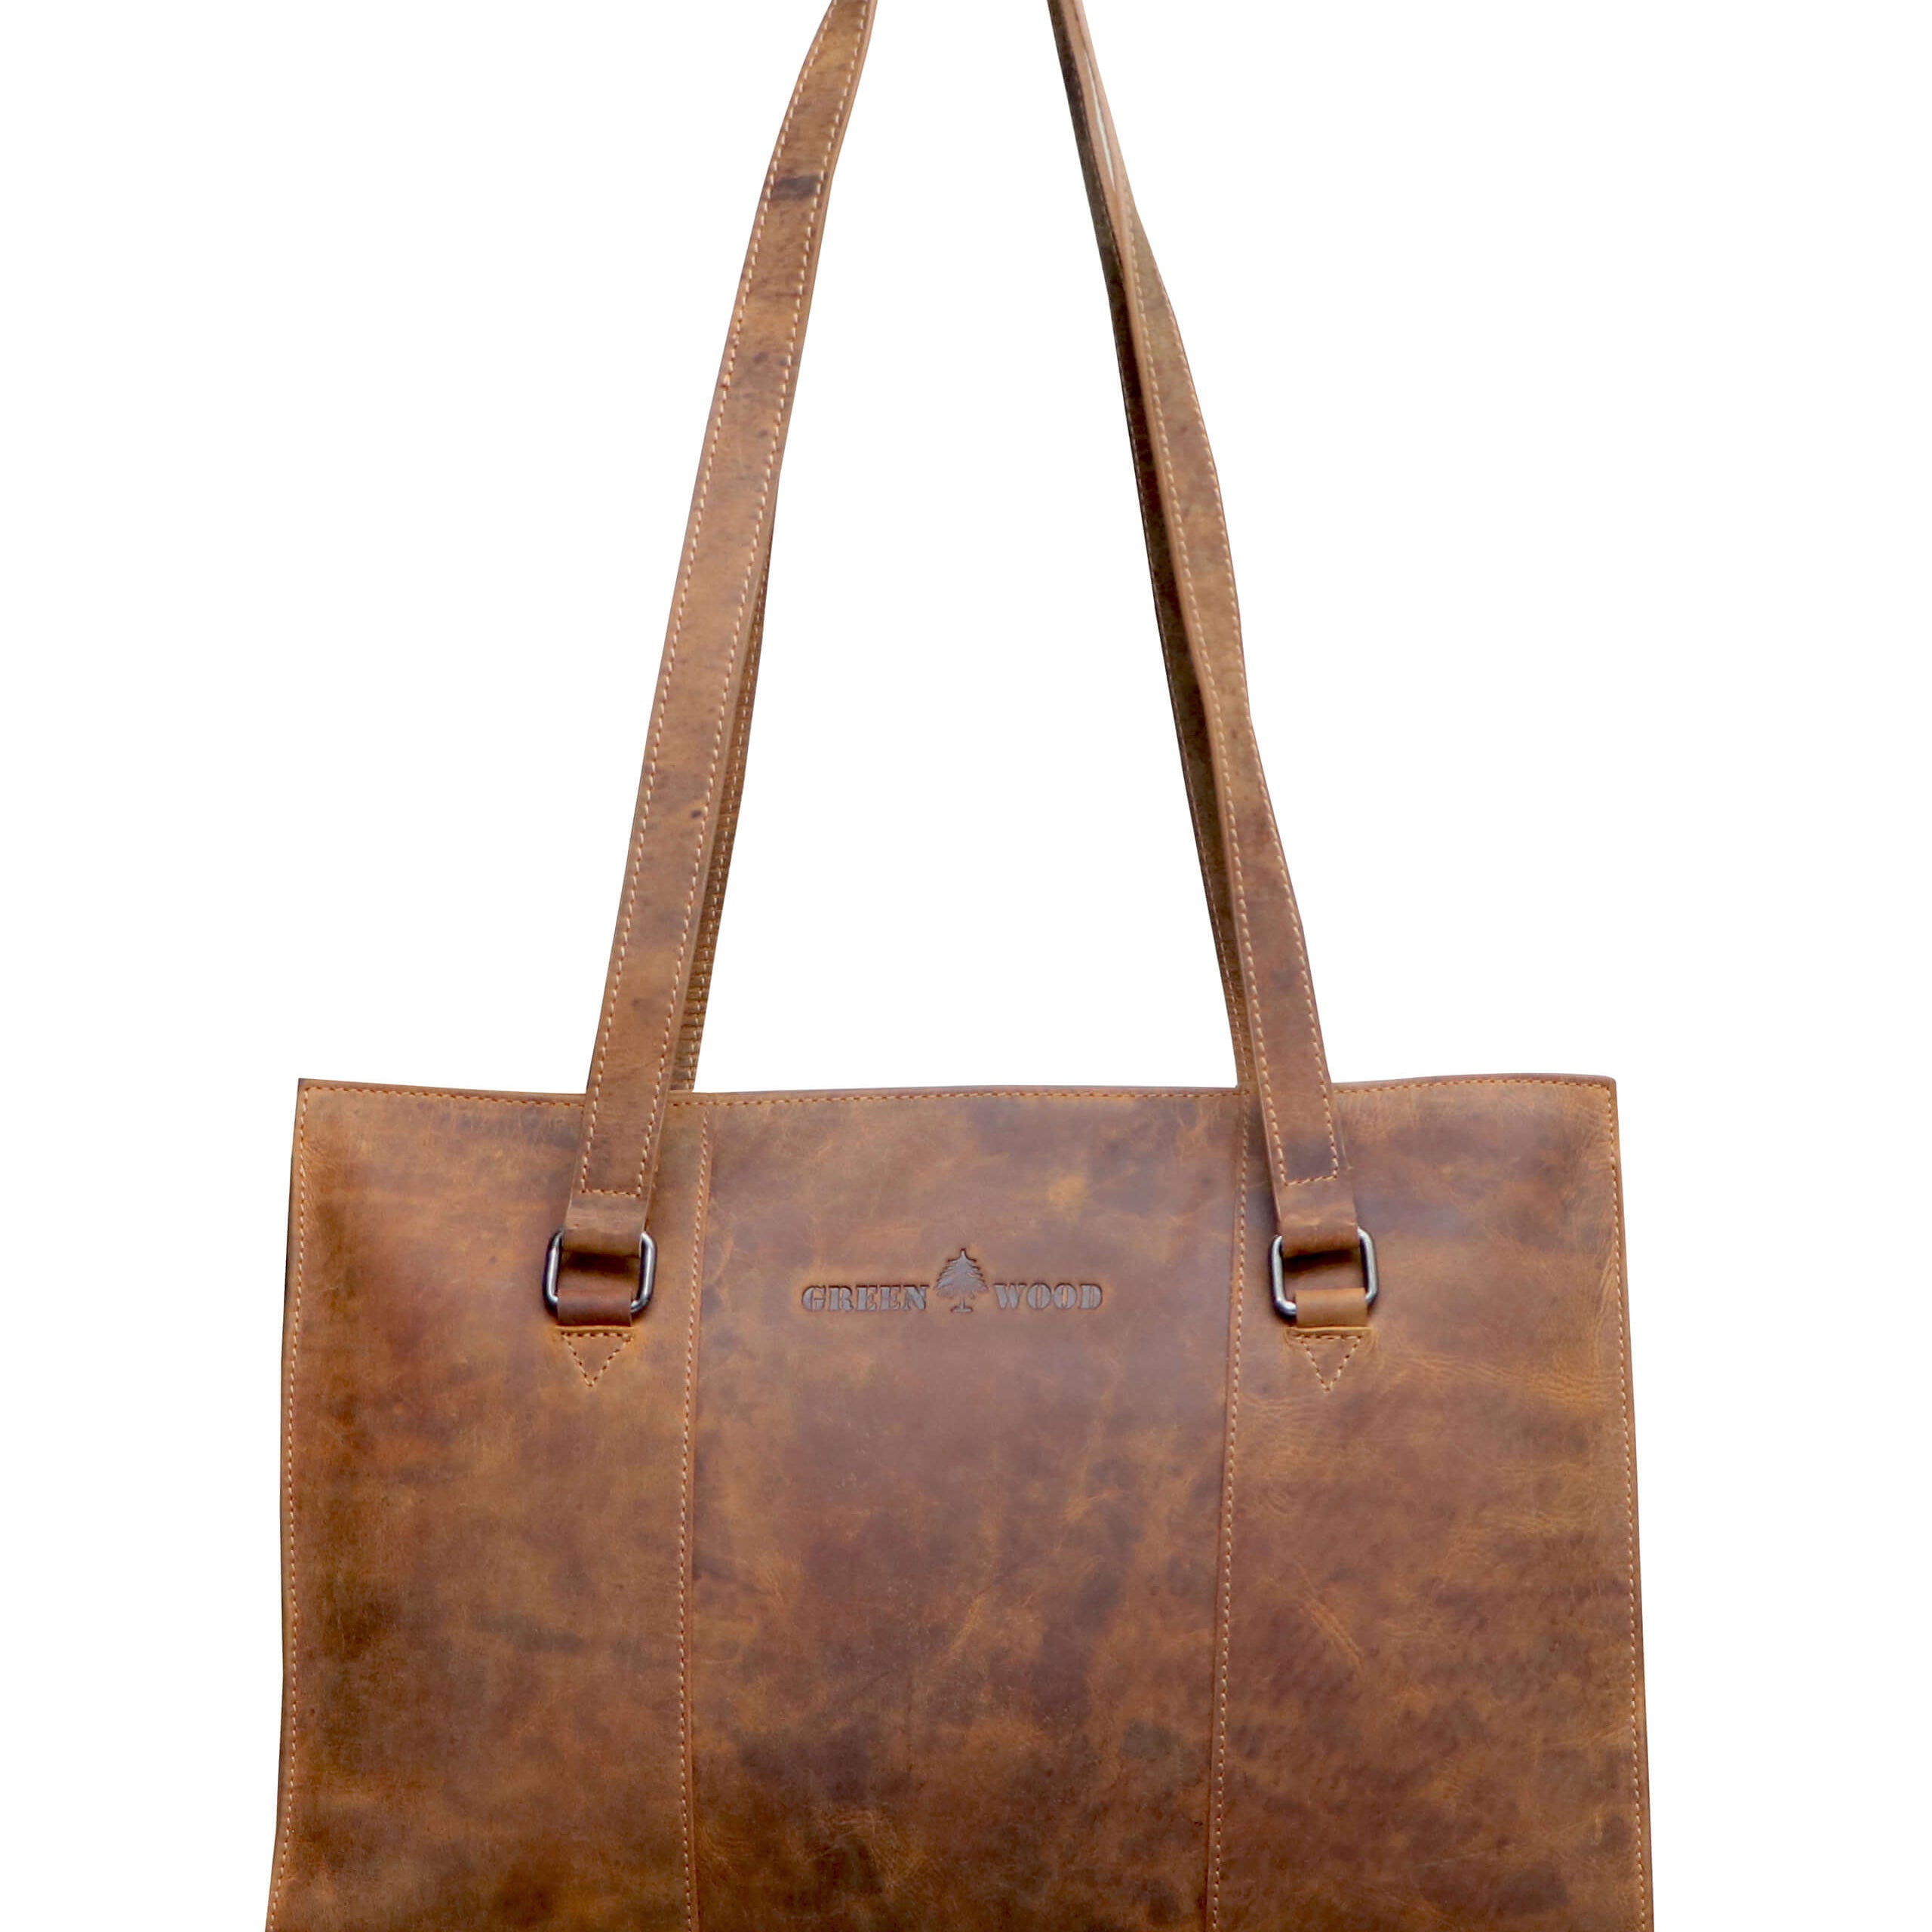 Emily Shopper Bag Women Top Handle Leather Clutch Shoulder Bag